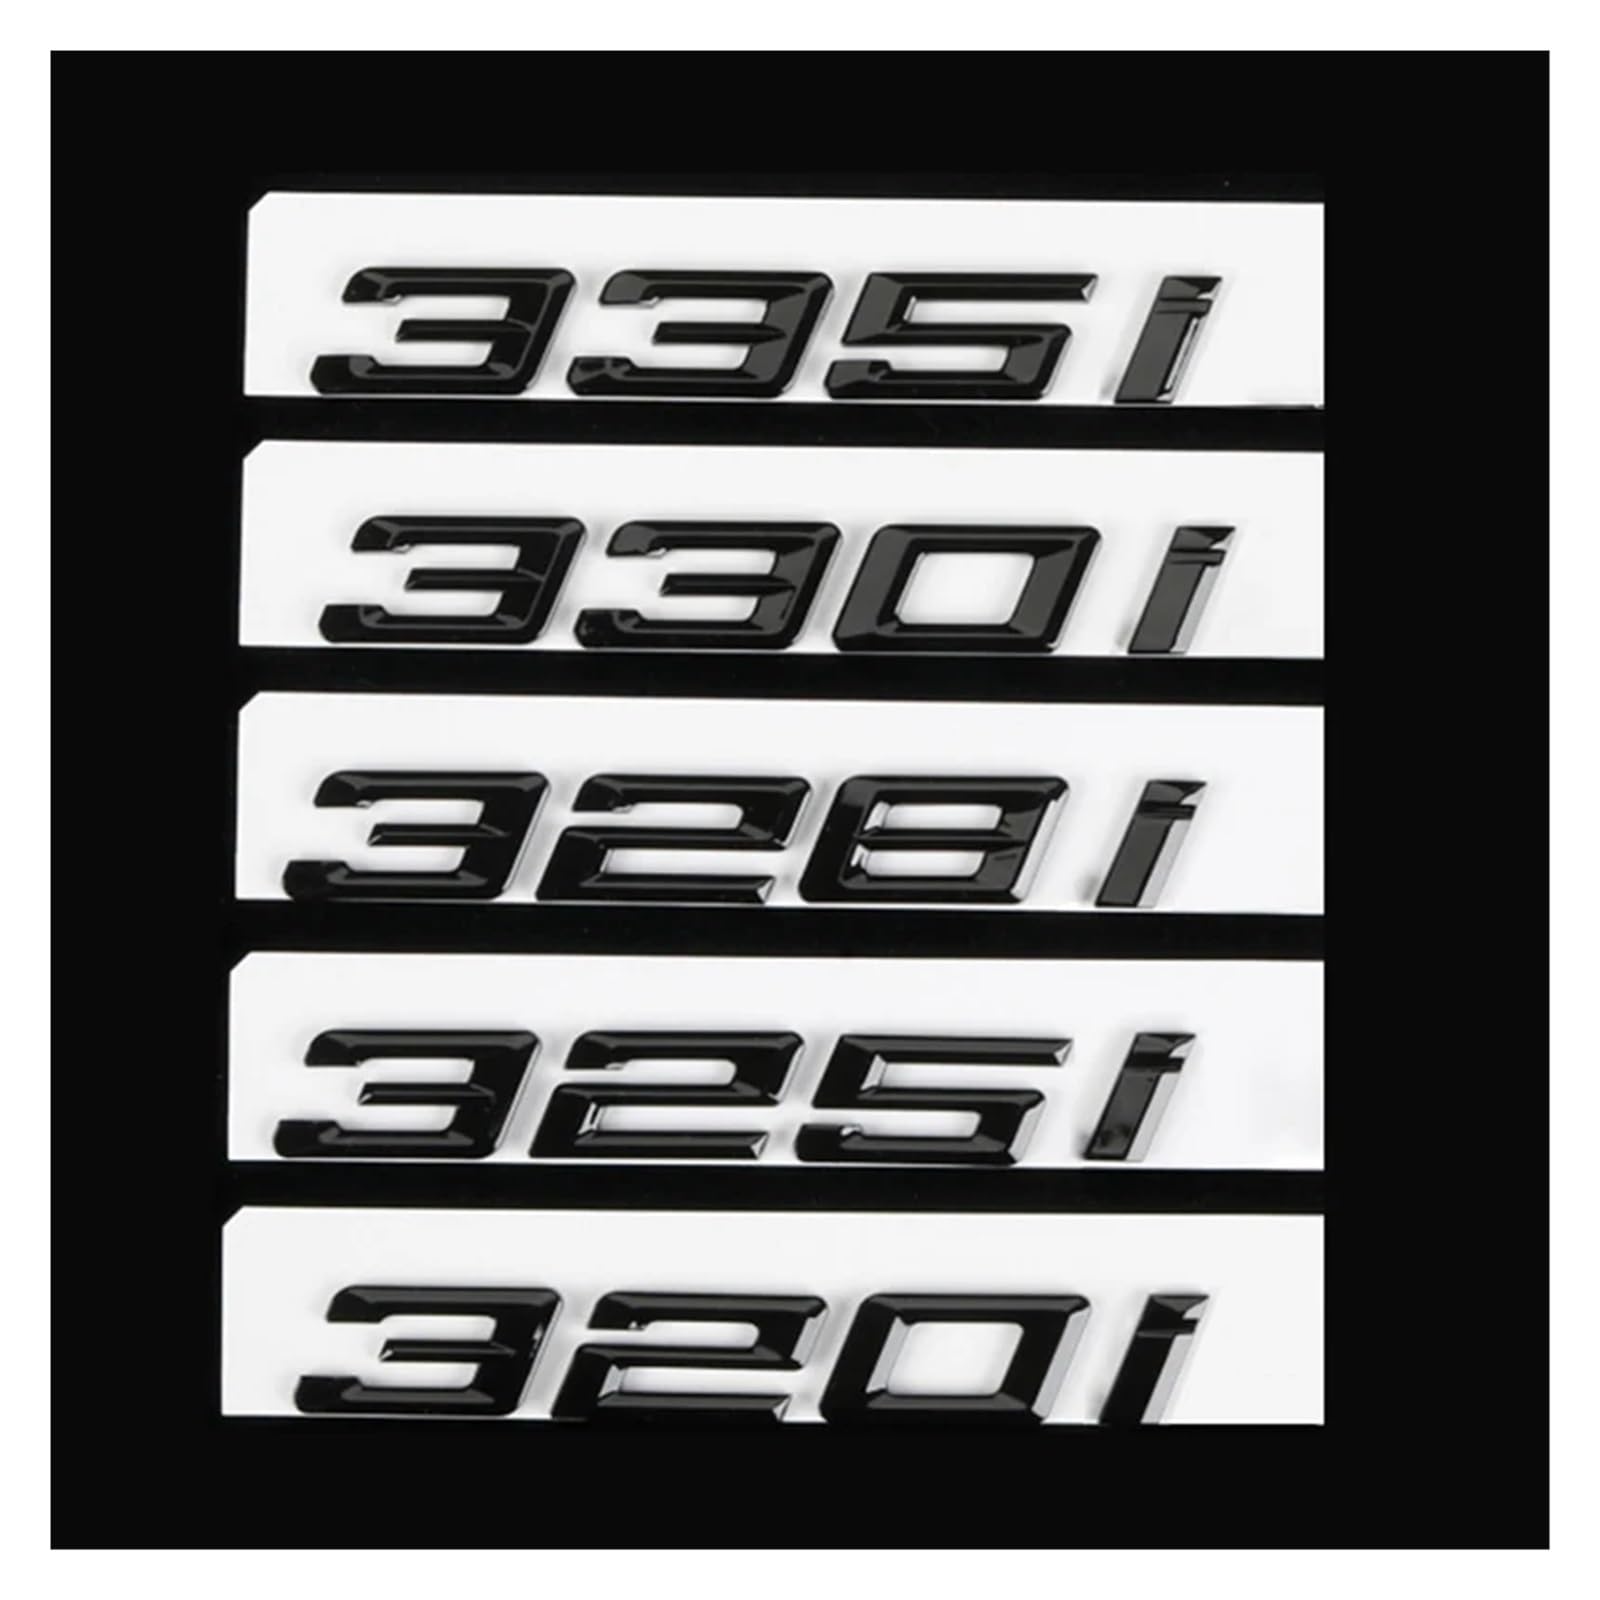 YSRWTBBA 3D-Autobuchstaben, kompatibel mit 325i 328i 330i 335i 340i 320i F30 E90 G20 E46 E36, Schriftzug, Emblem, Logo, Abzeichen, Aufkleber, Kofferraumzubehör, einfach abziehe von YSRWTBBA